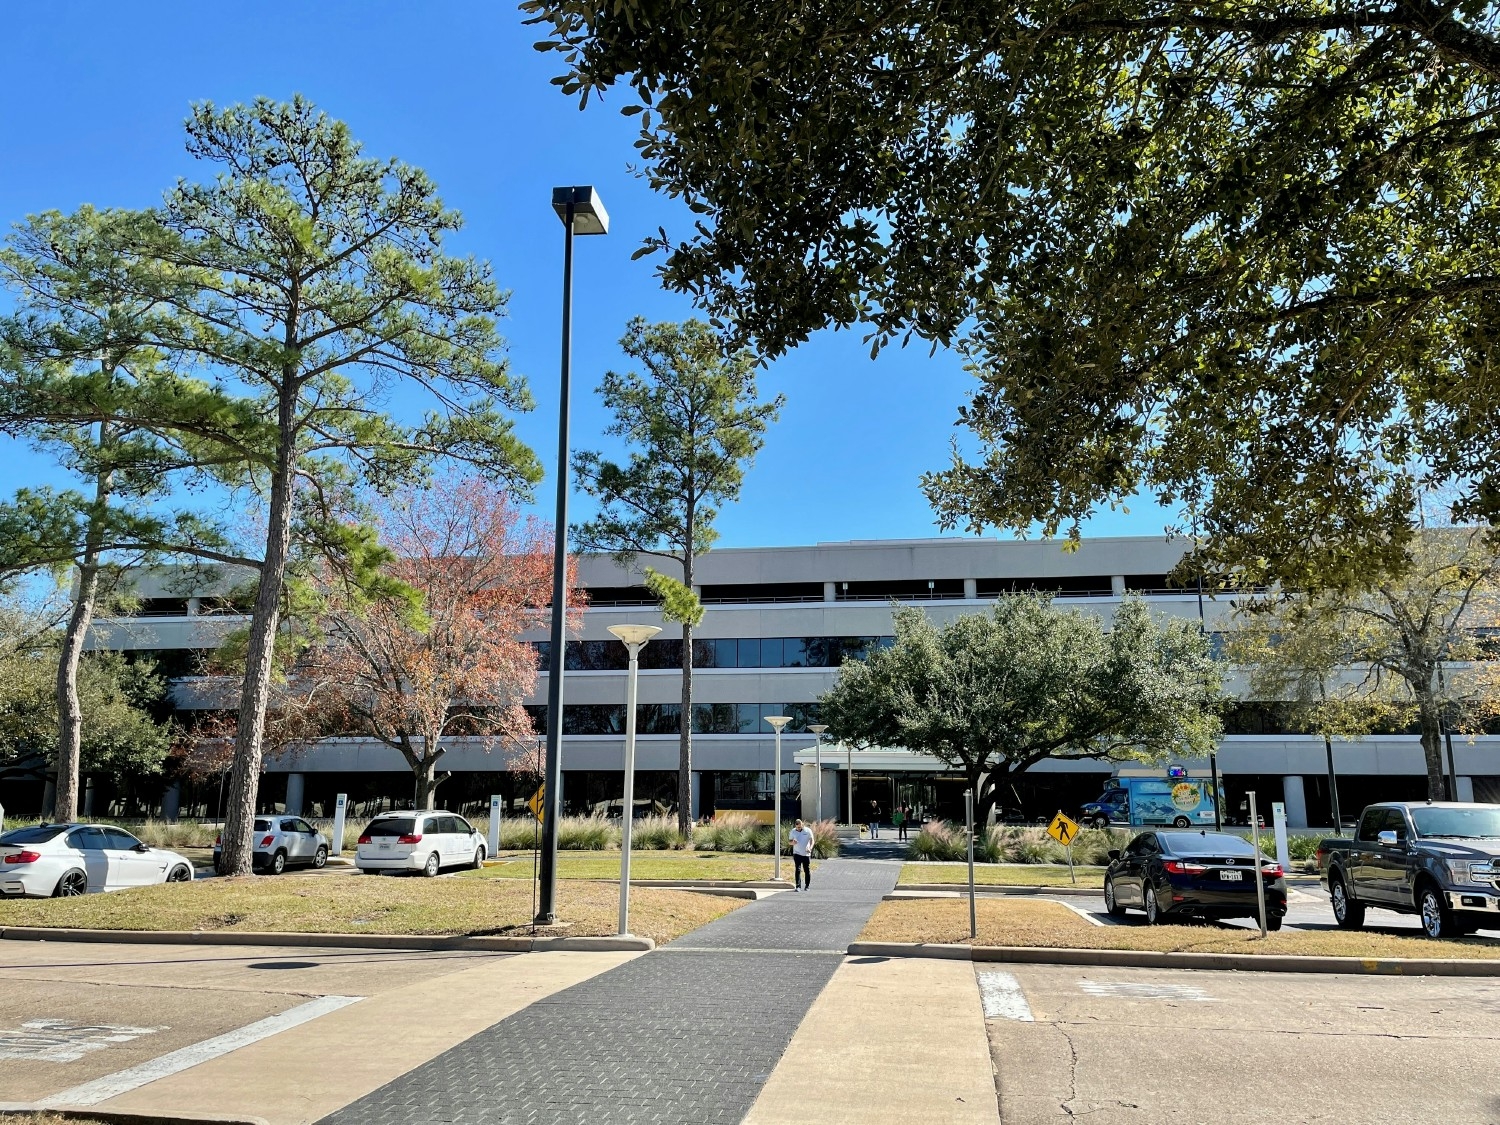 The IronEdge headquarters resides in Houston, Texas. 